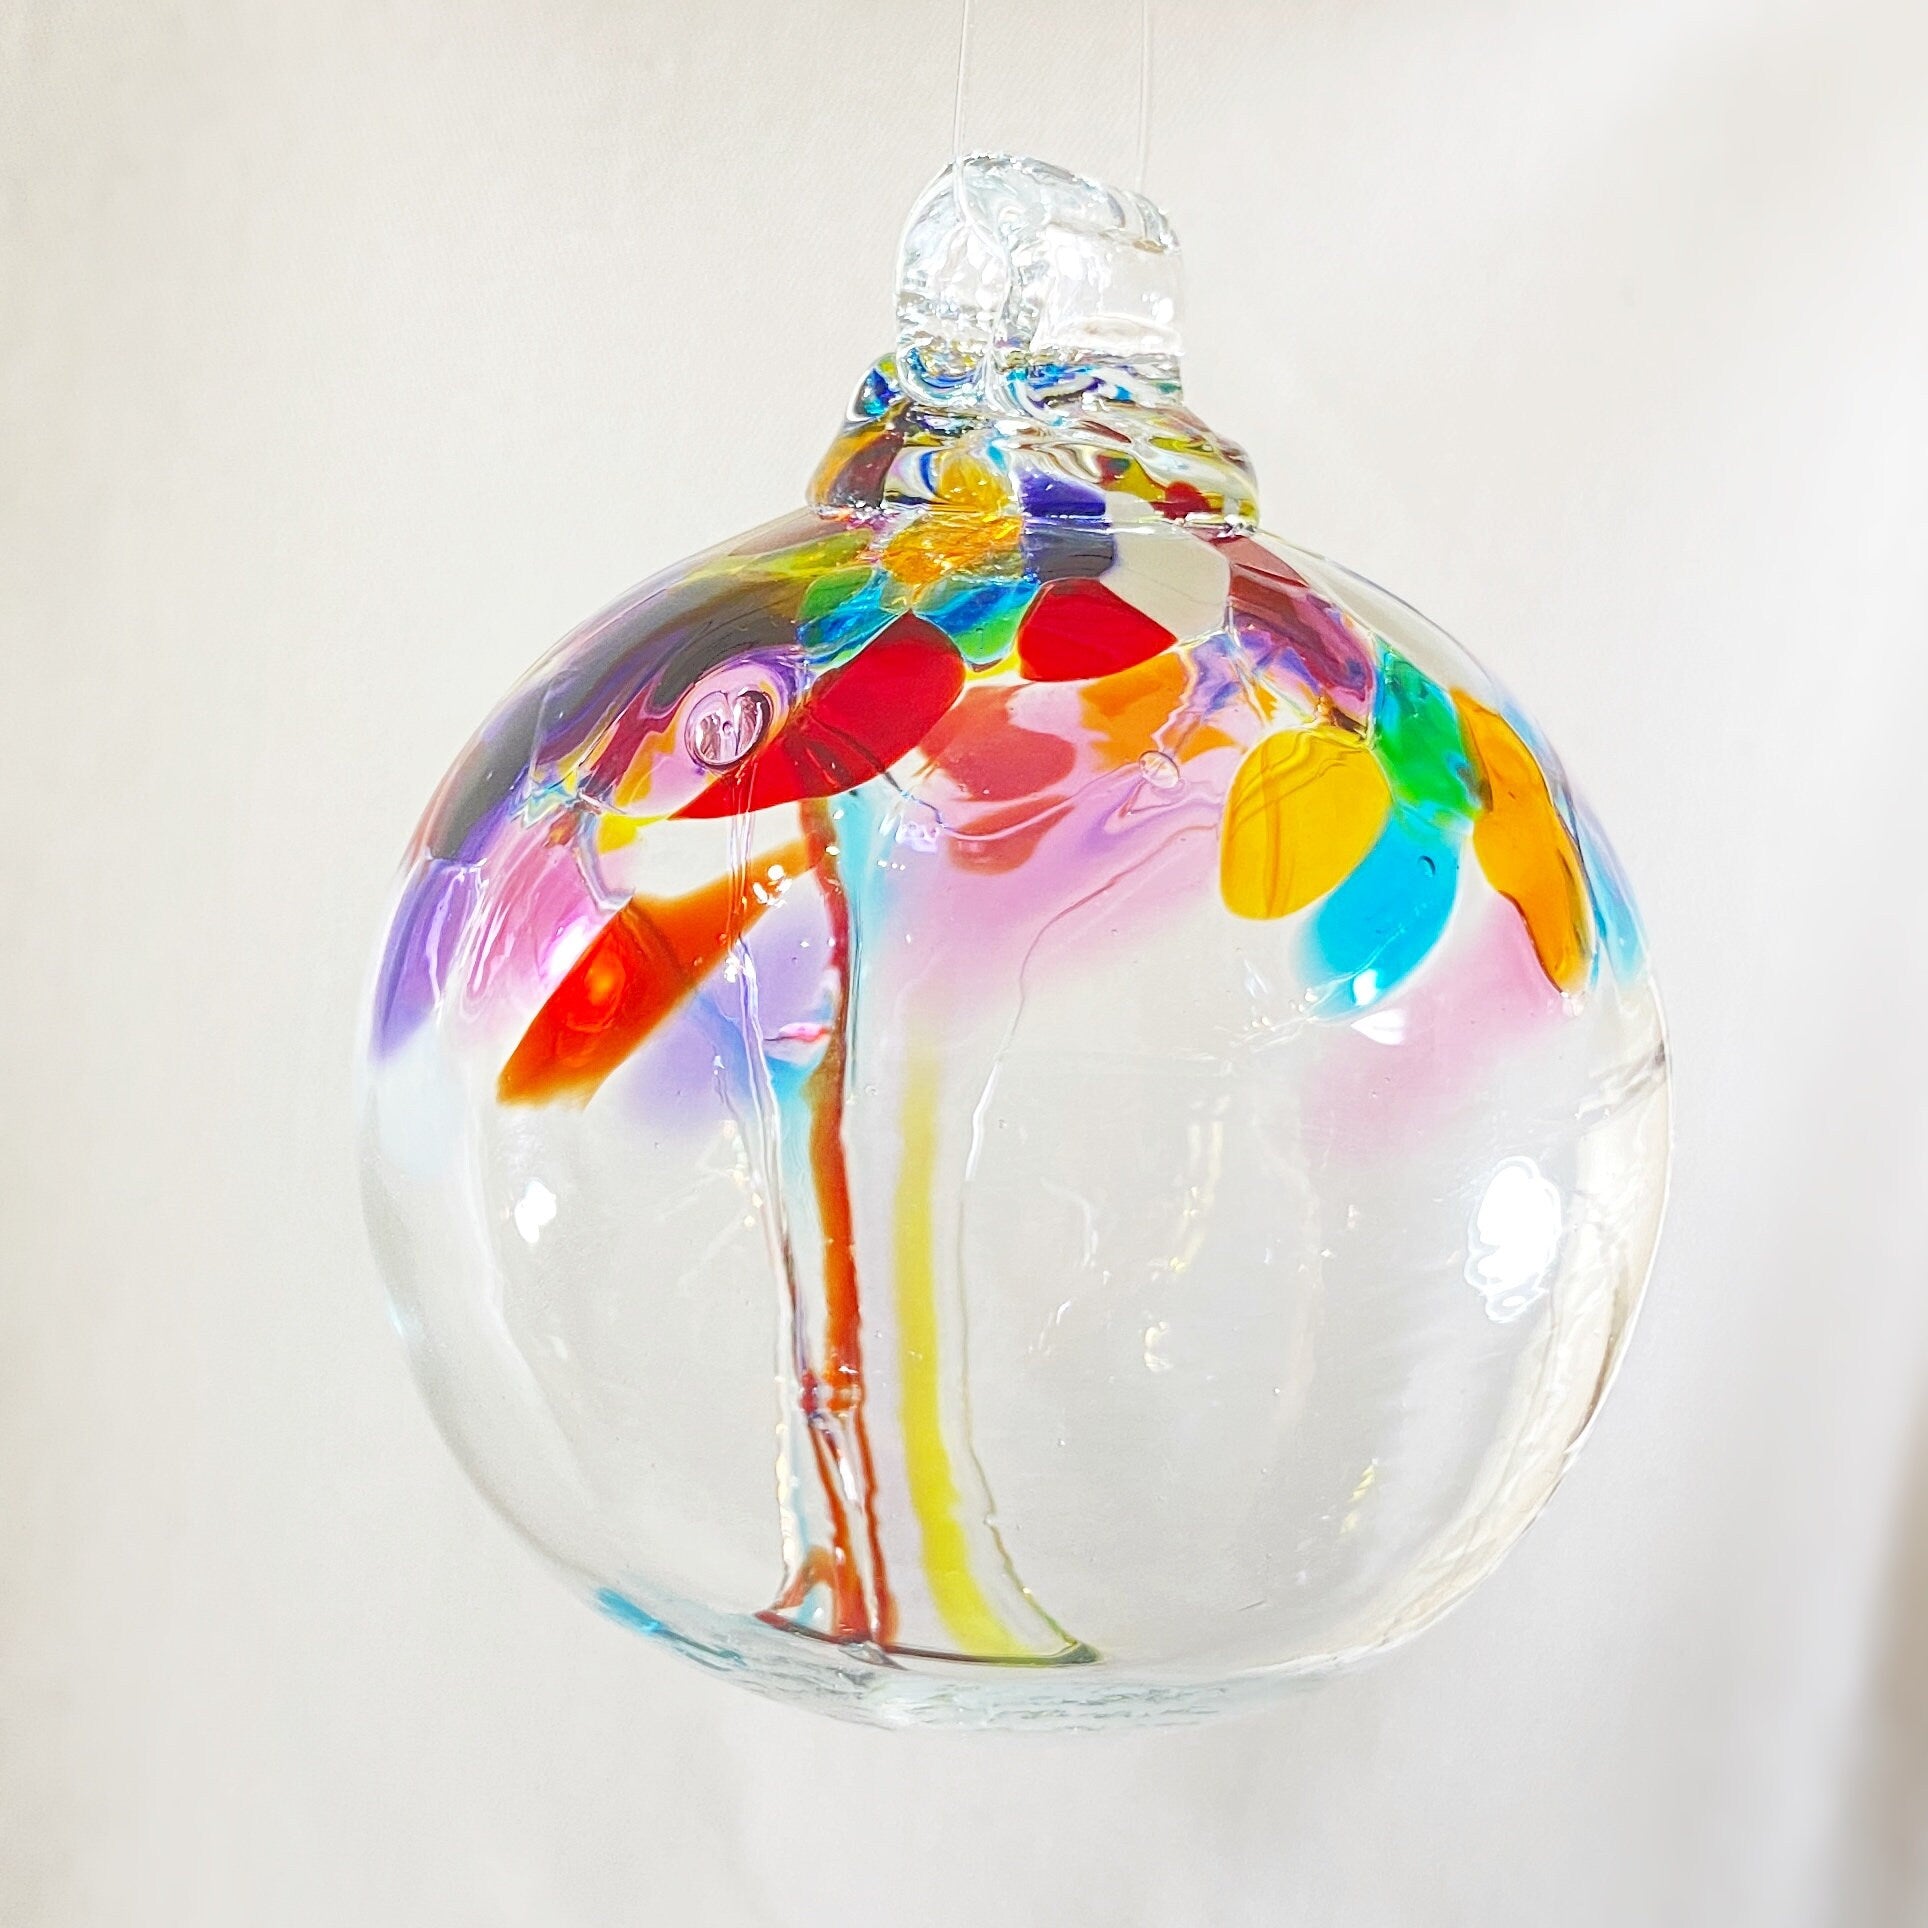 Handmade Glass Art 2” Globe Ornament - Tree of Wonder